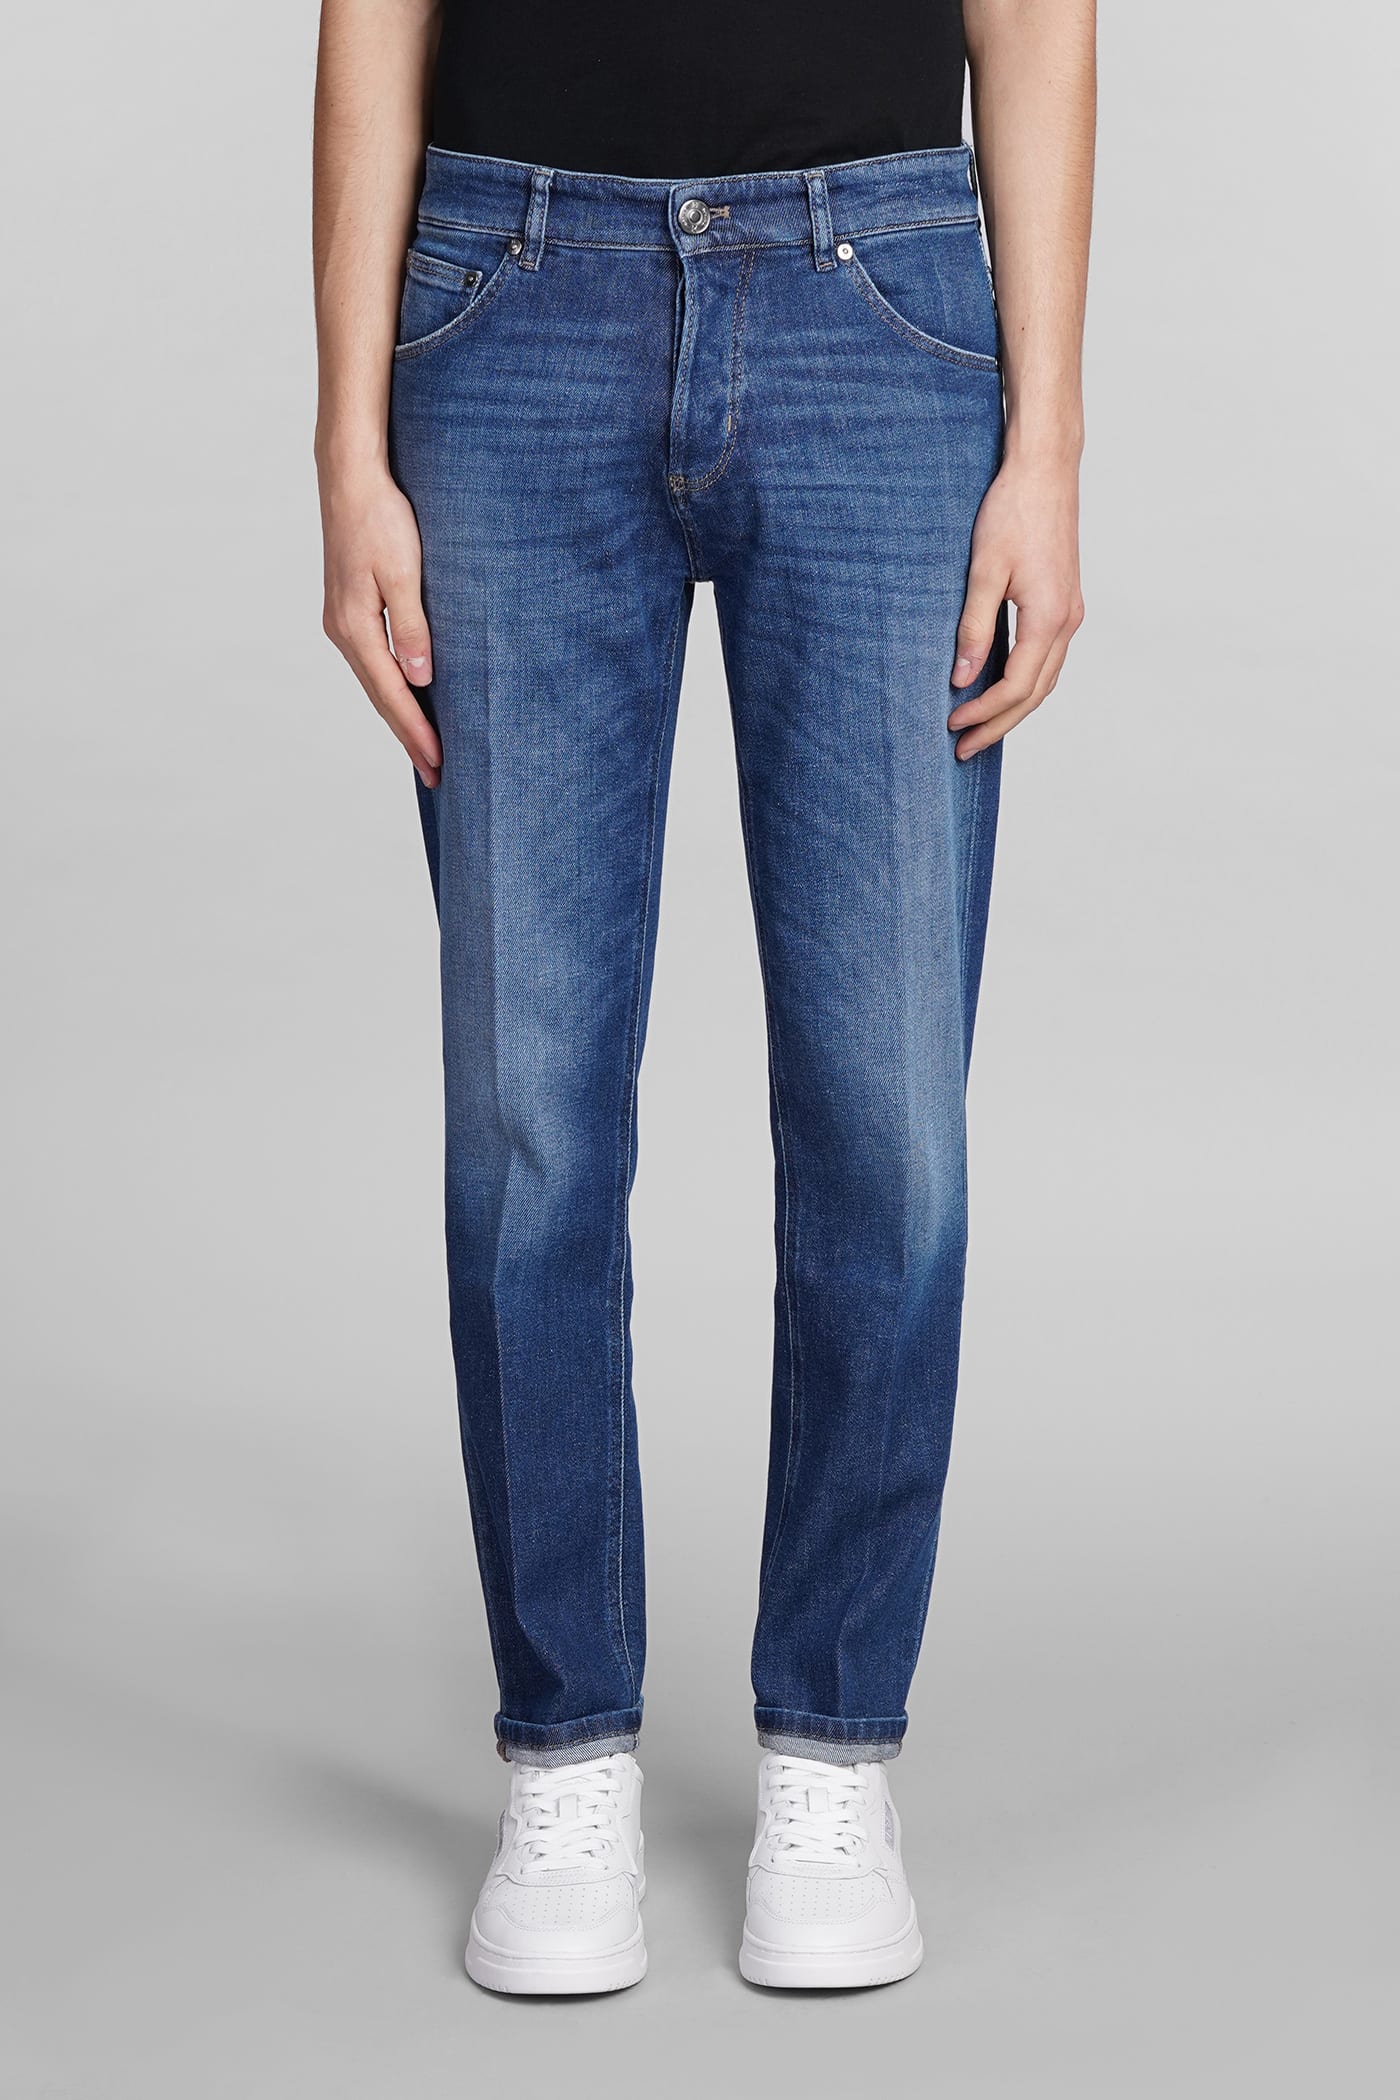 Pt01 Jeans In Blue Cotton